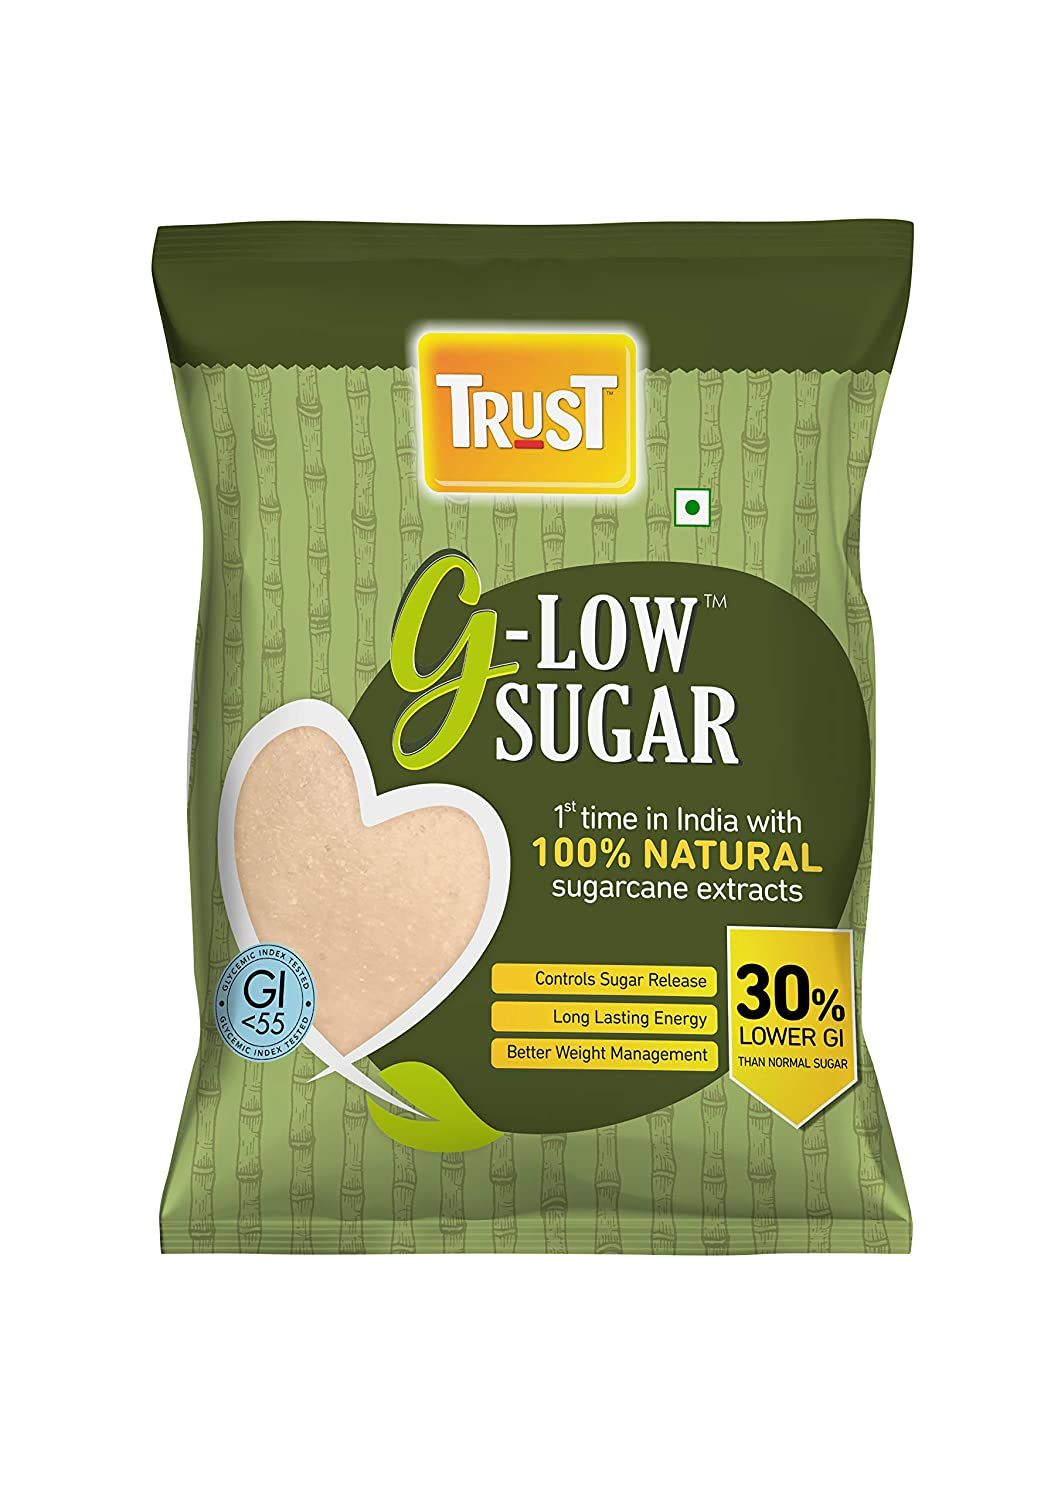 Trust Diabetic Friendly G-Low Sugar Image